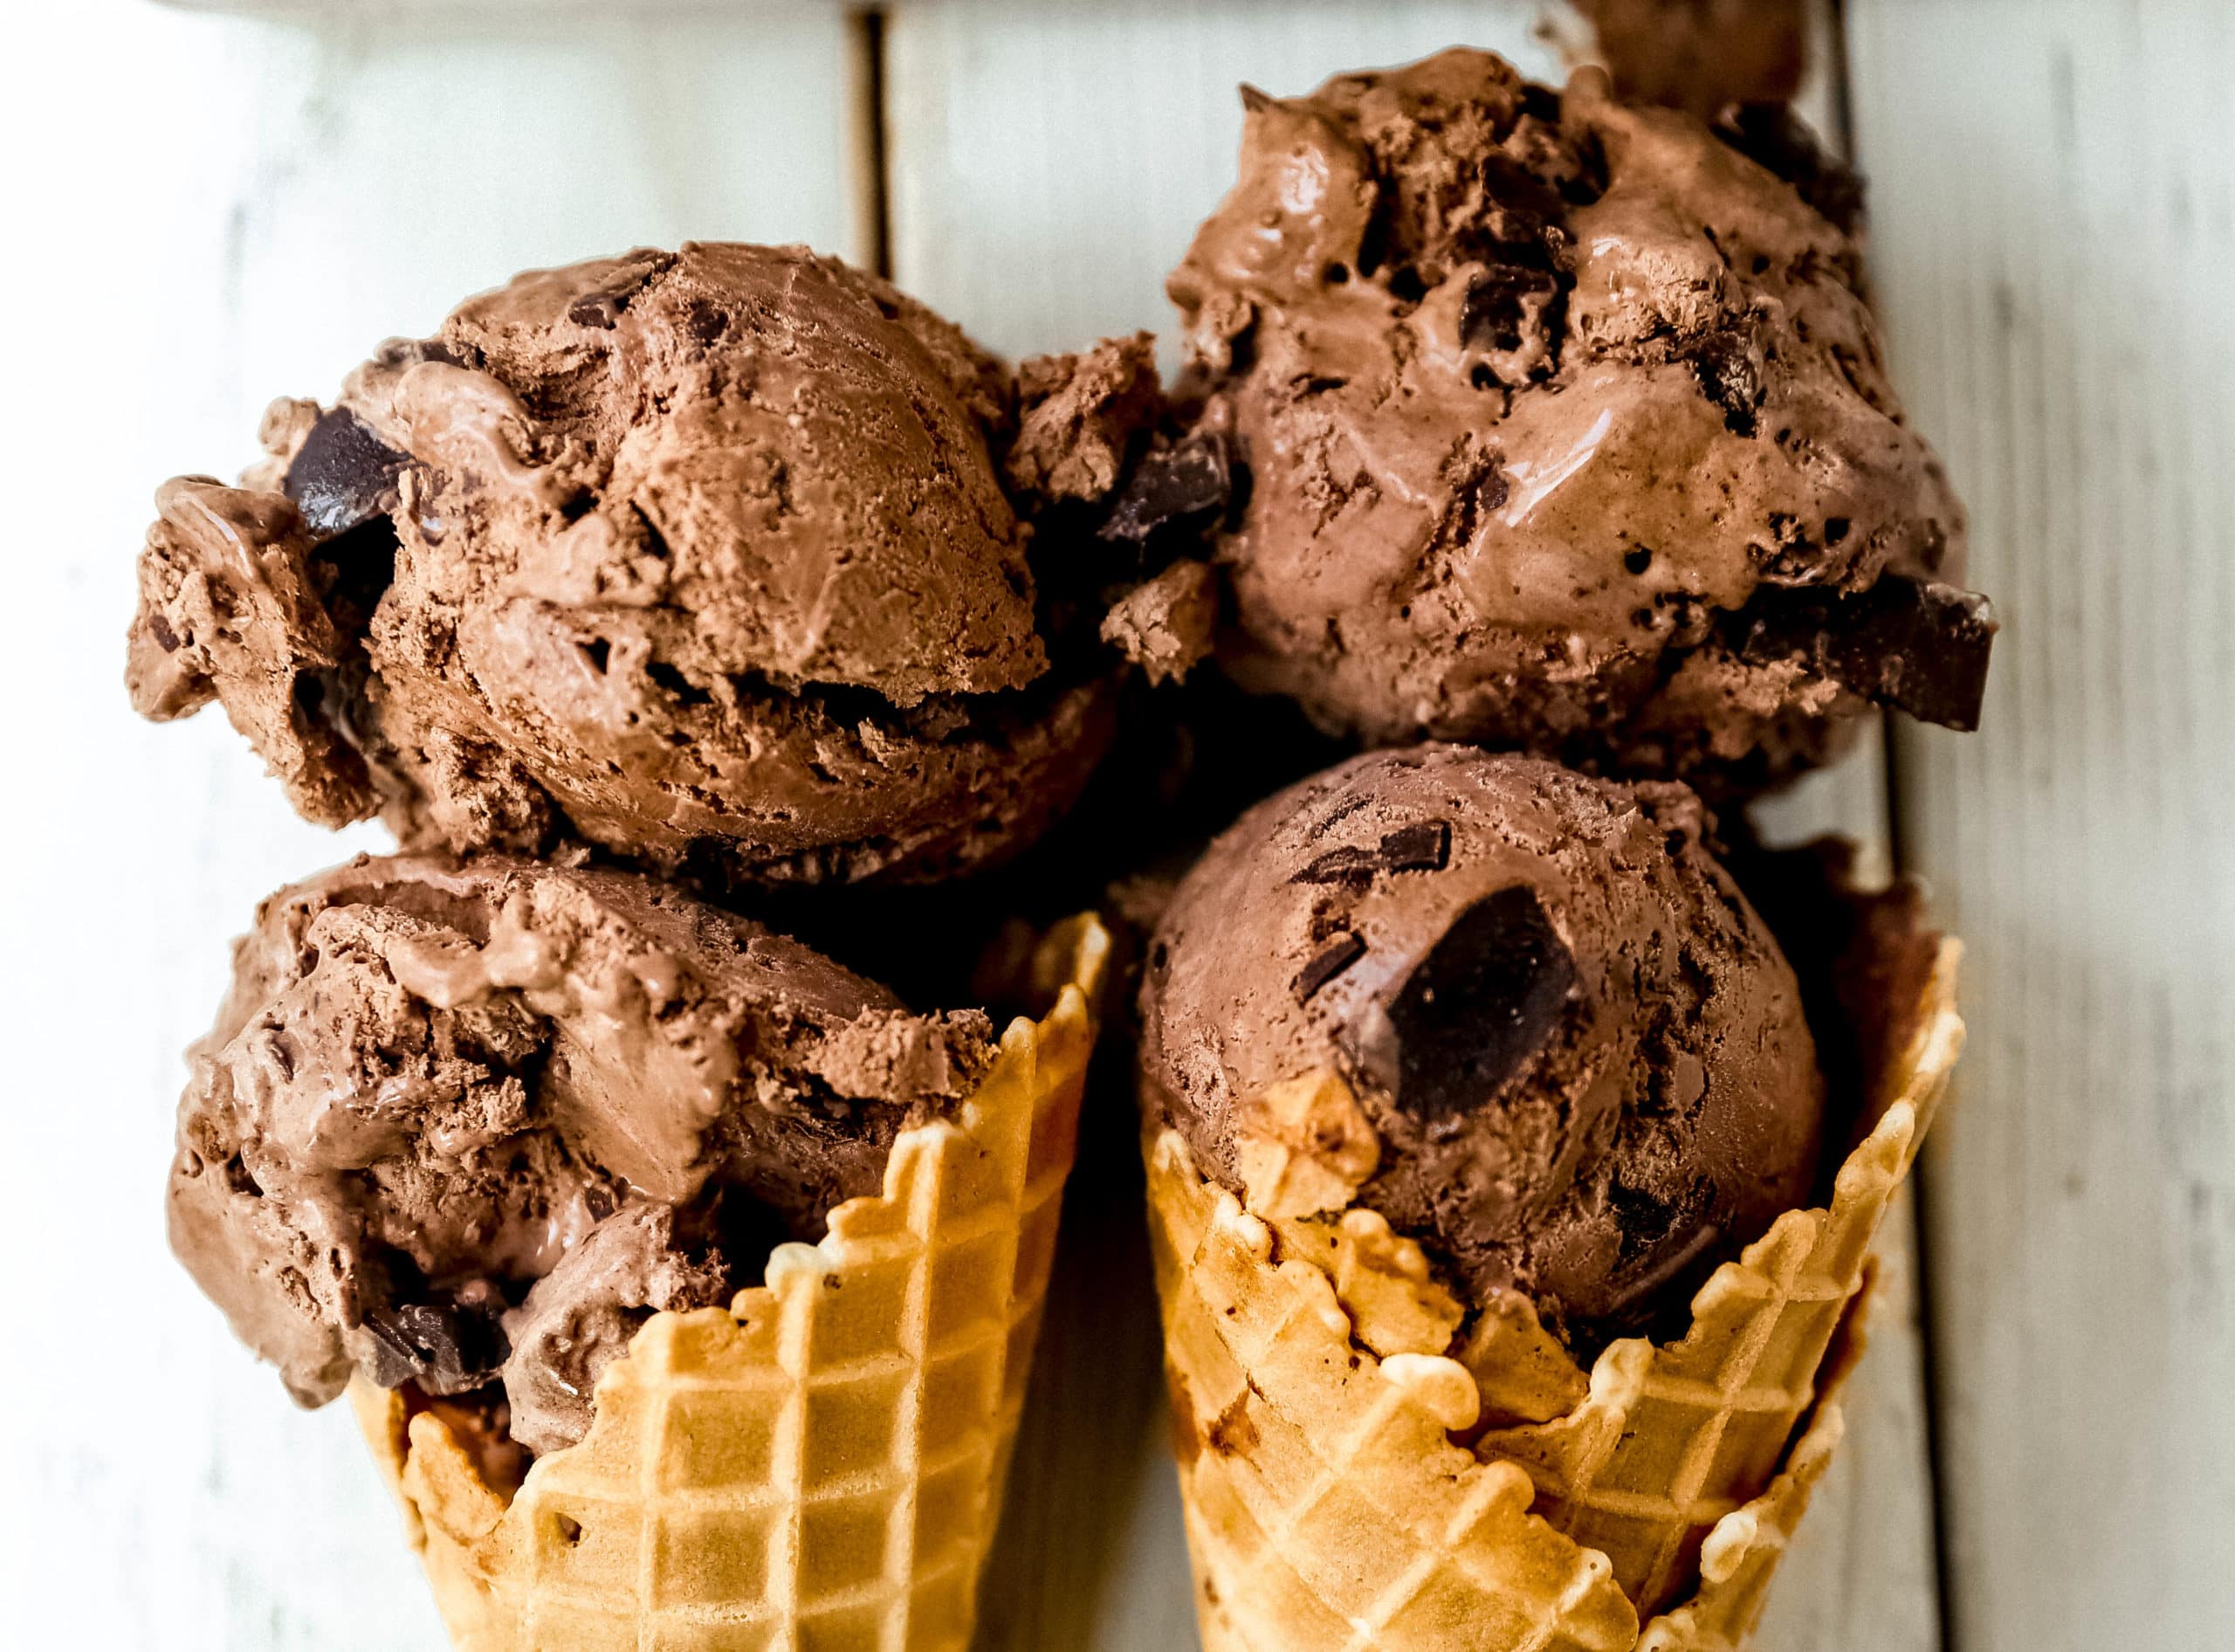 https://www.modernhoney.com/wp-content/uploads/2020/09/No-Churn-Chocolate-Chunk-Ice-Cream-7-scaled.jpg